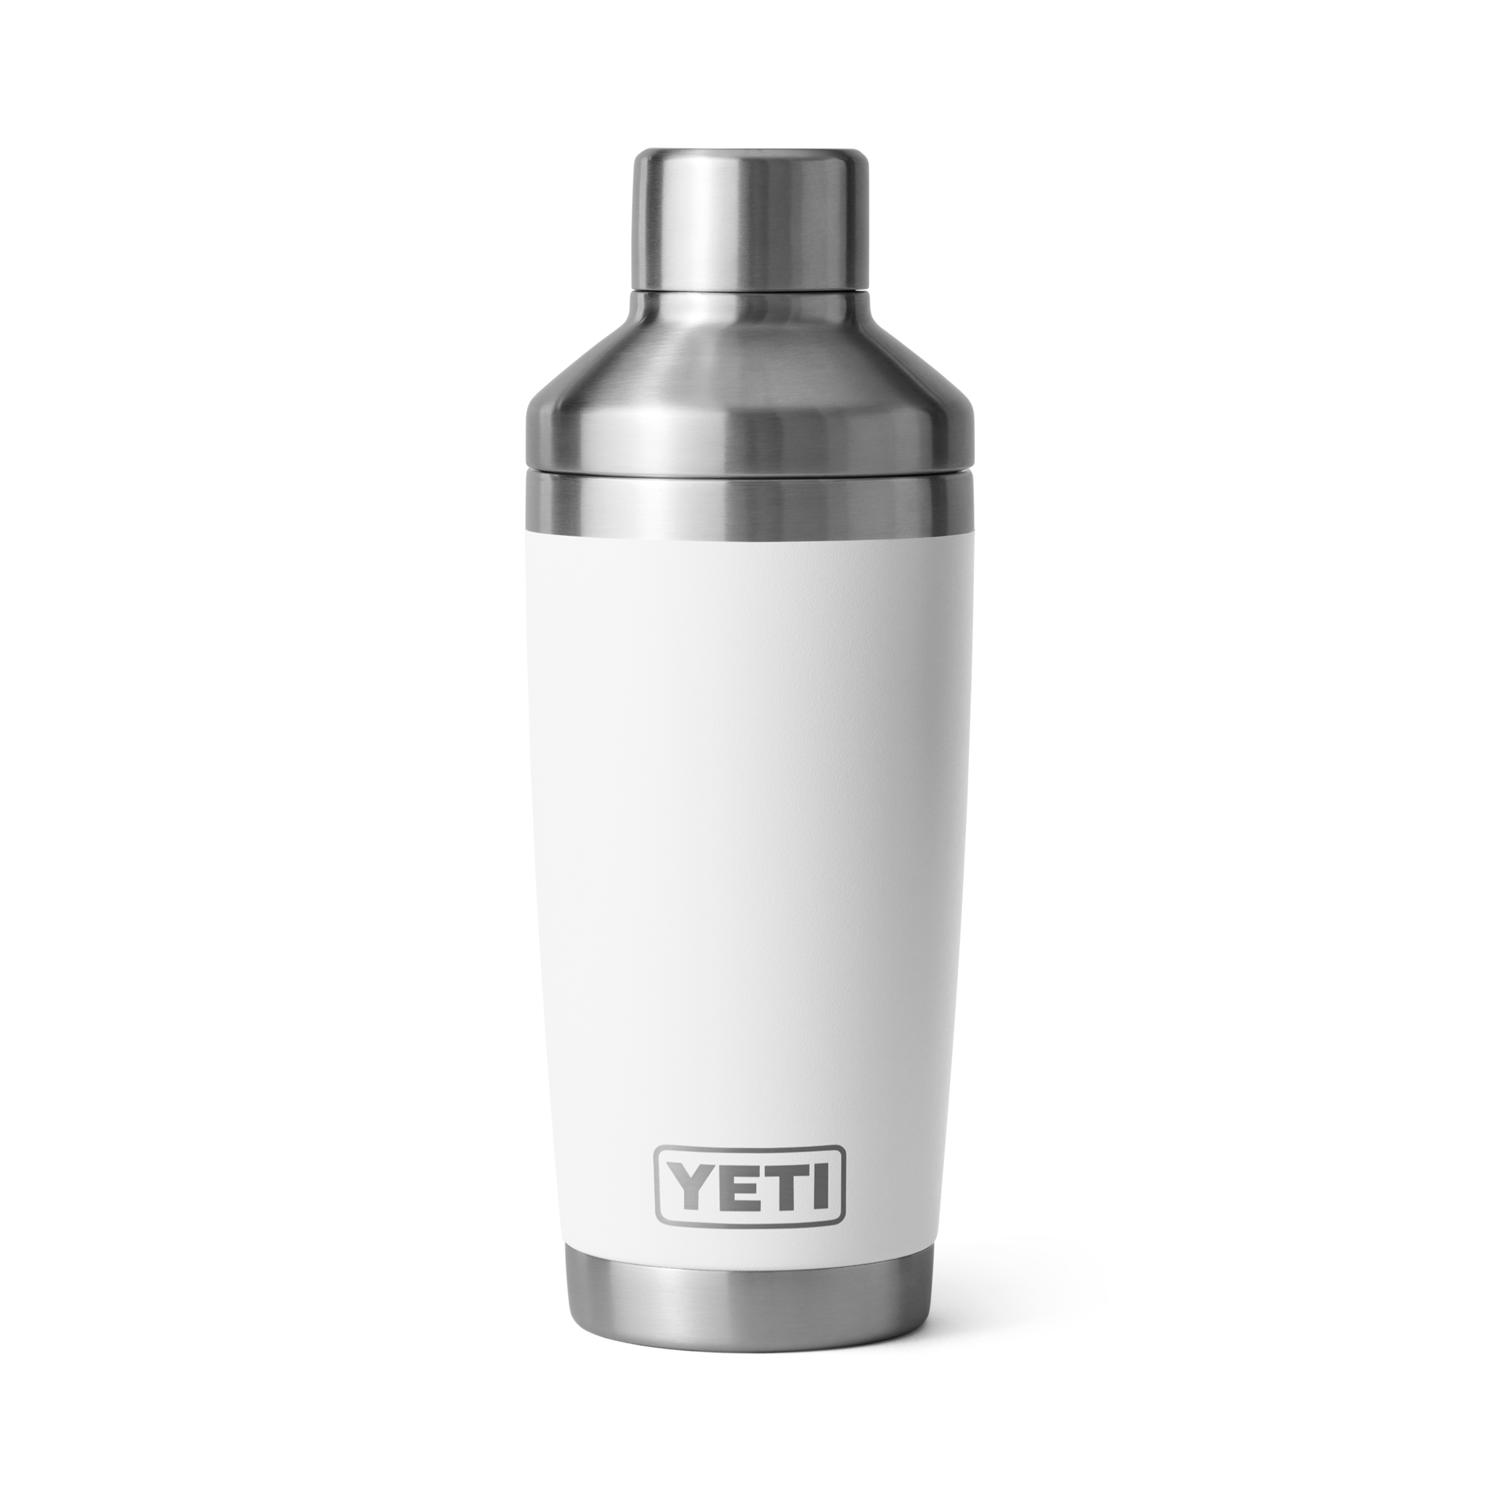 YETI Rambler 256 oz Navy Stainless Steel Beverage Bucket - Ace Hardware